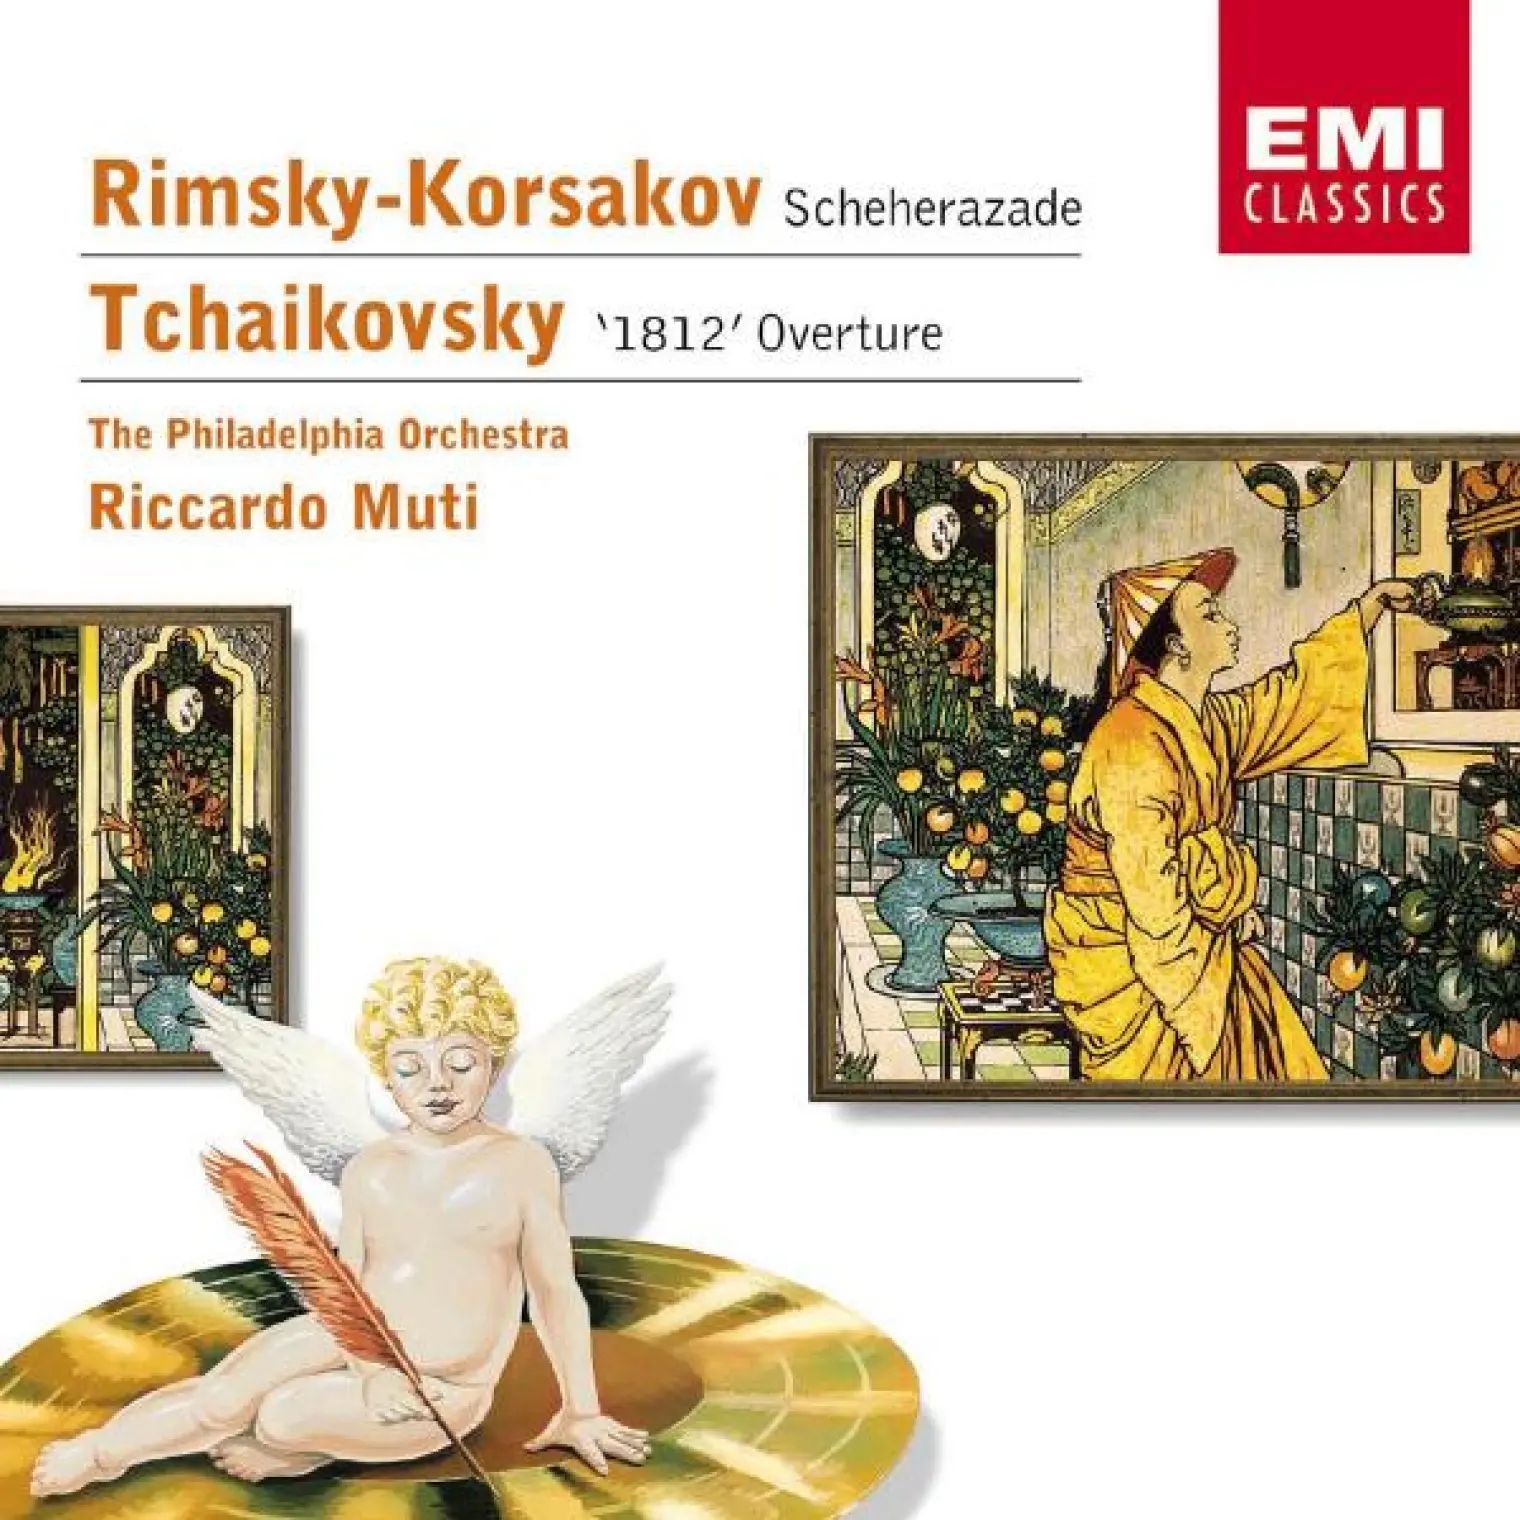 Rimsky-Korsakov: Scheherazade - Tchaikovsky: 1812 Overture -  Philadelphia Orchestra 